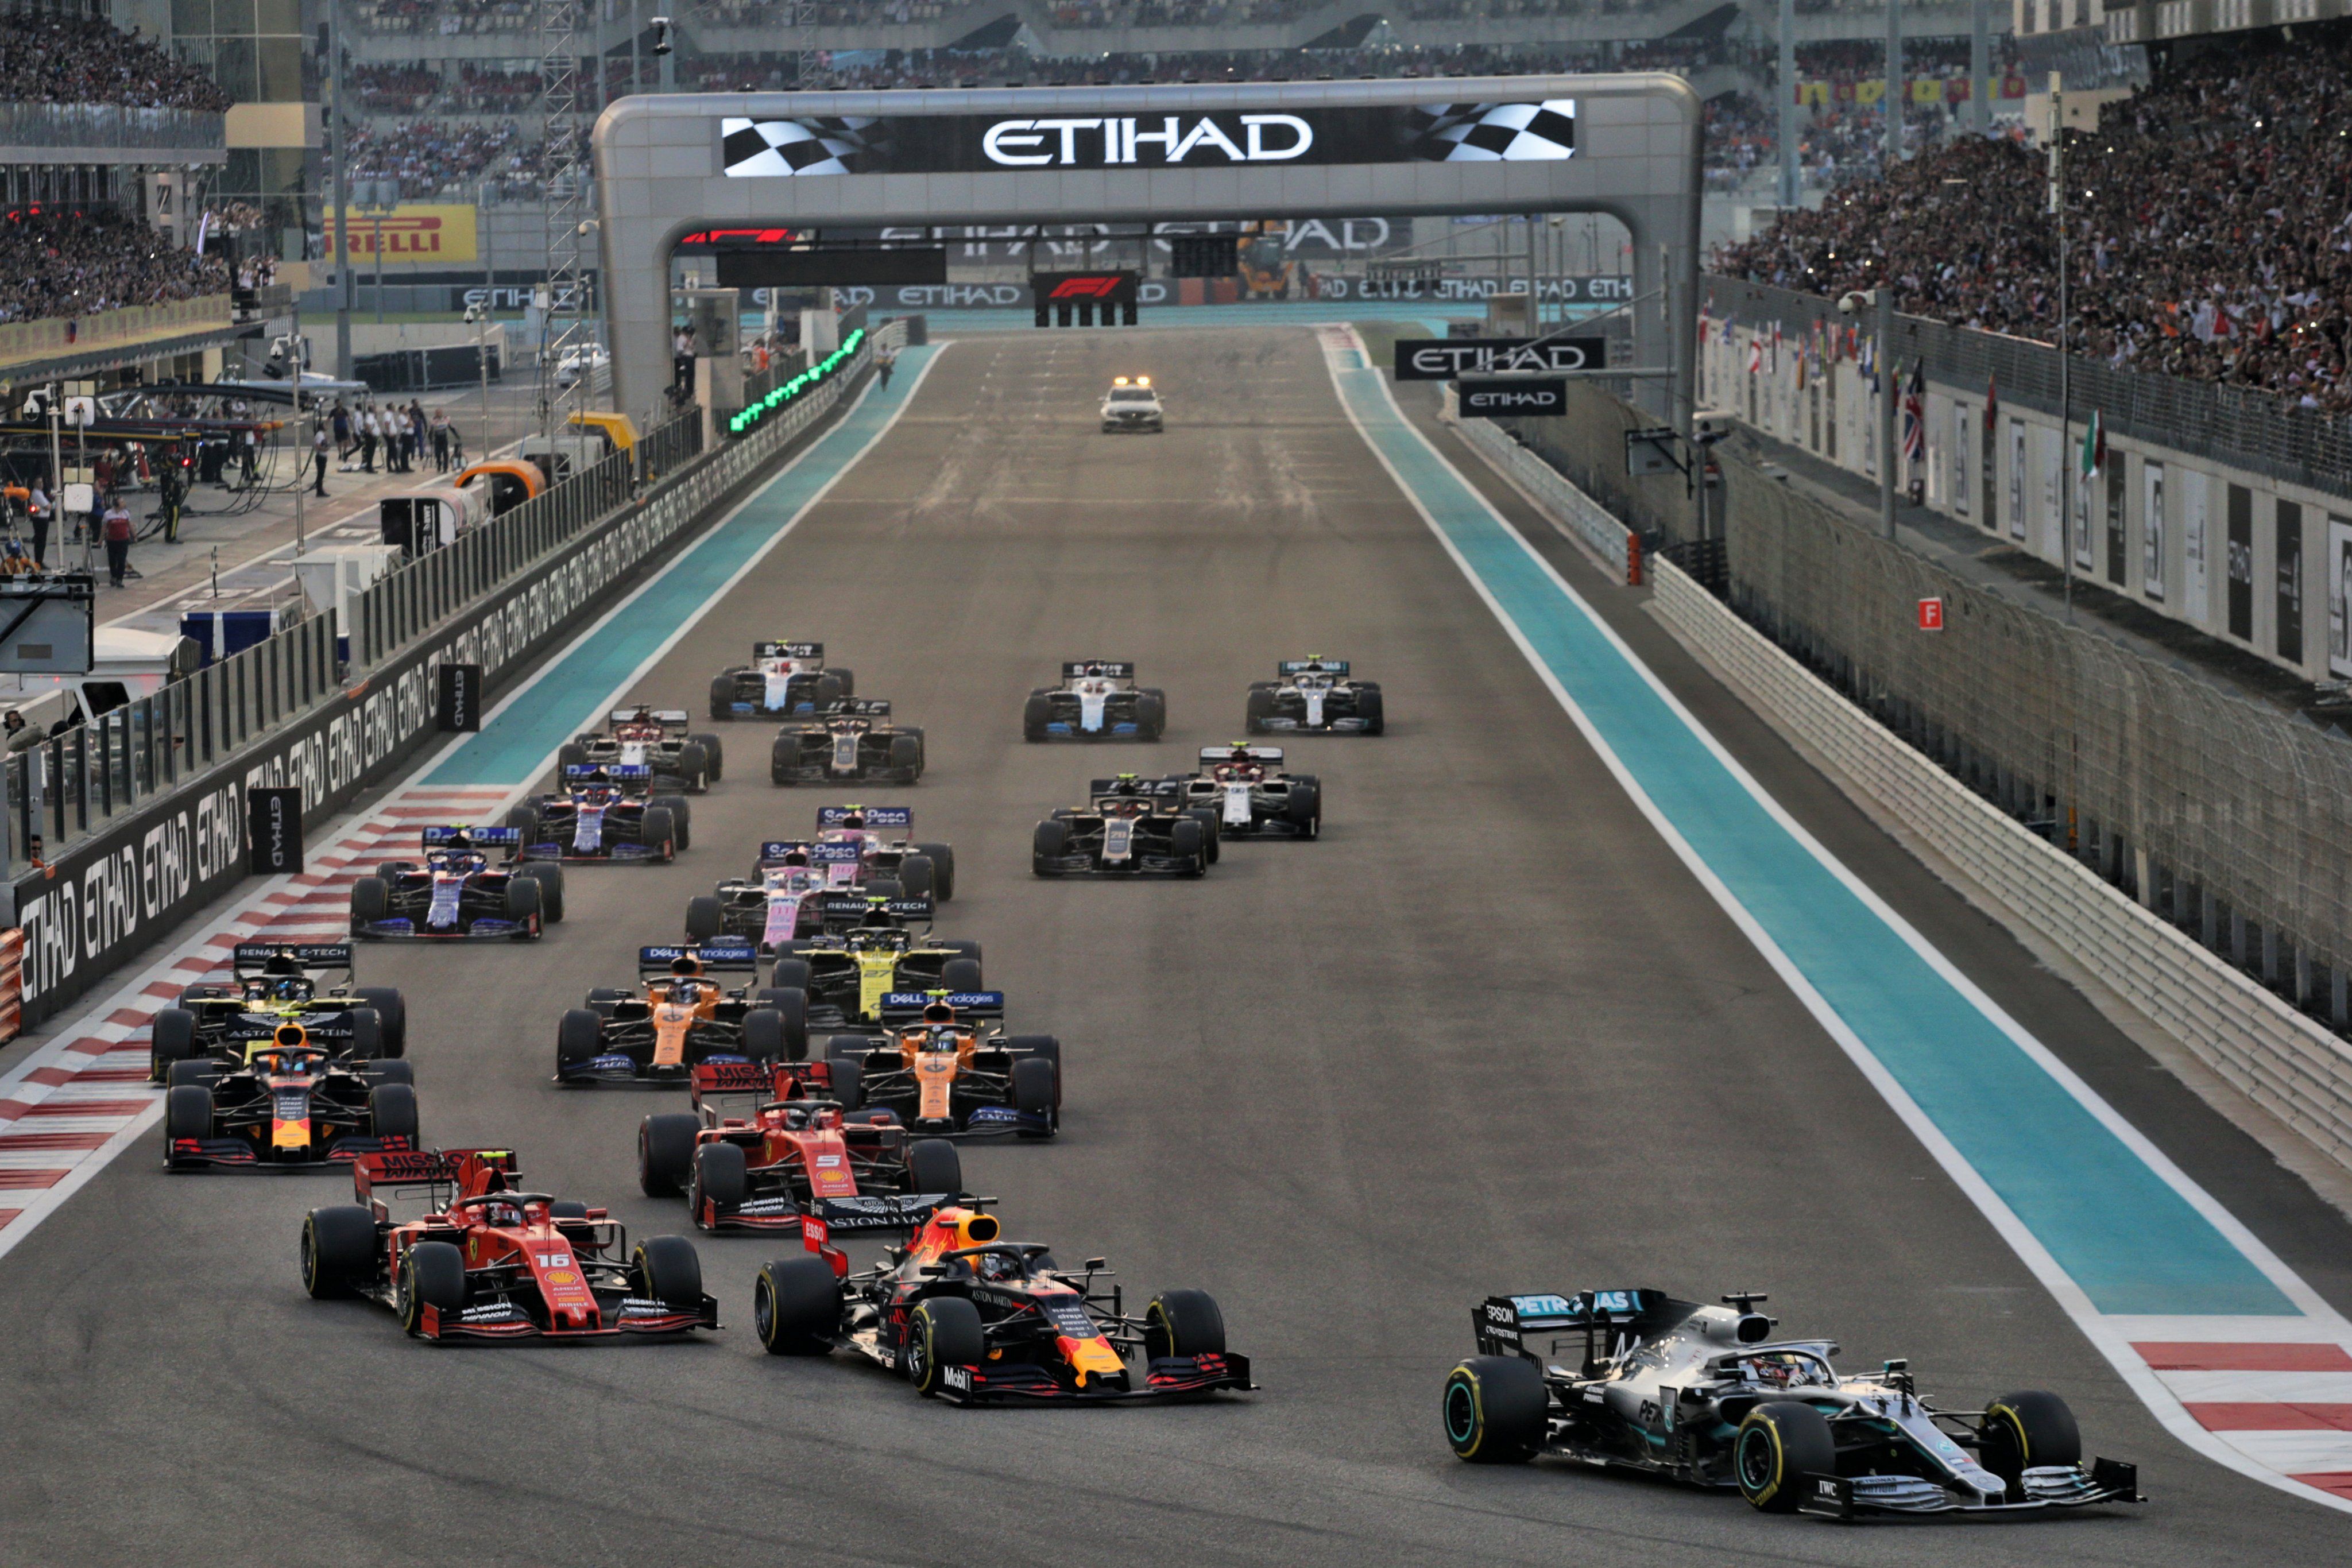 Abu Dhabi GP Key statistics and information from 2019 F1 race